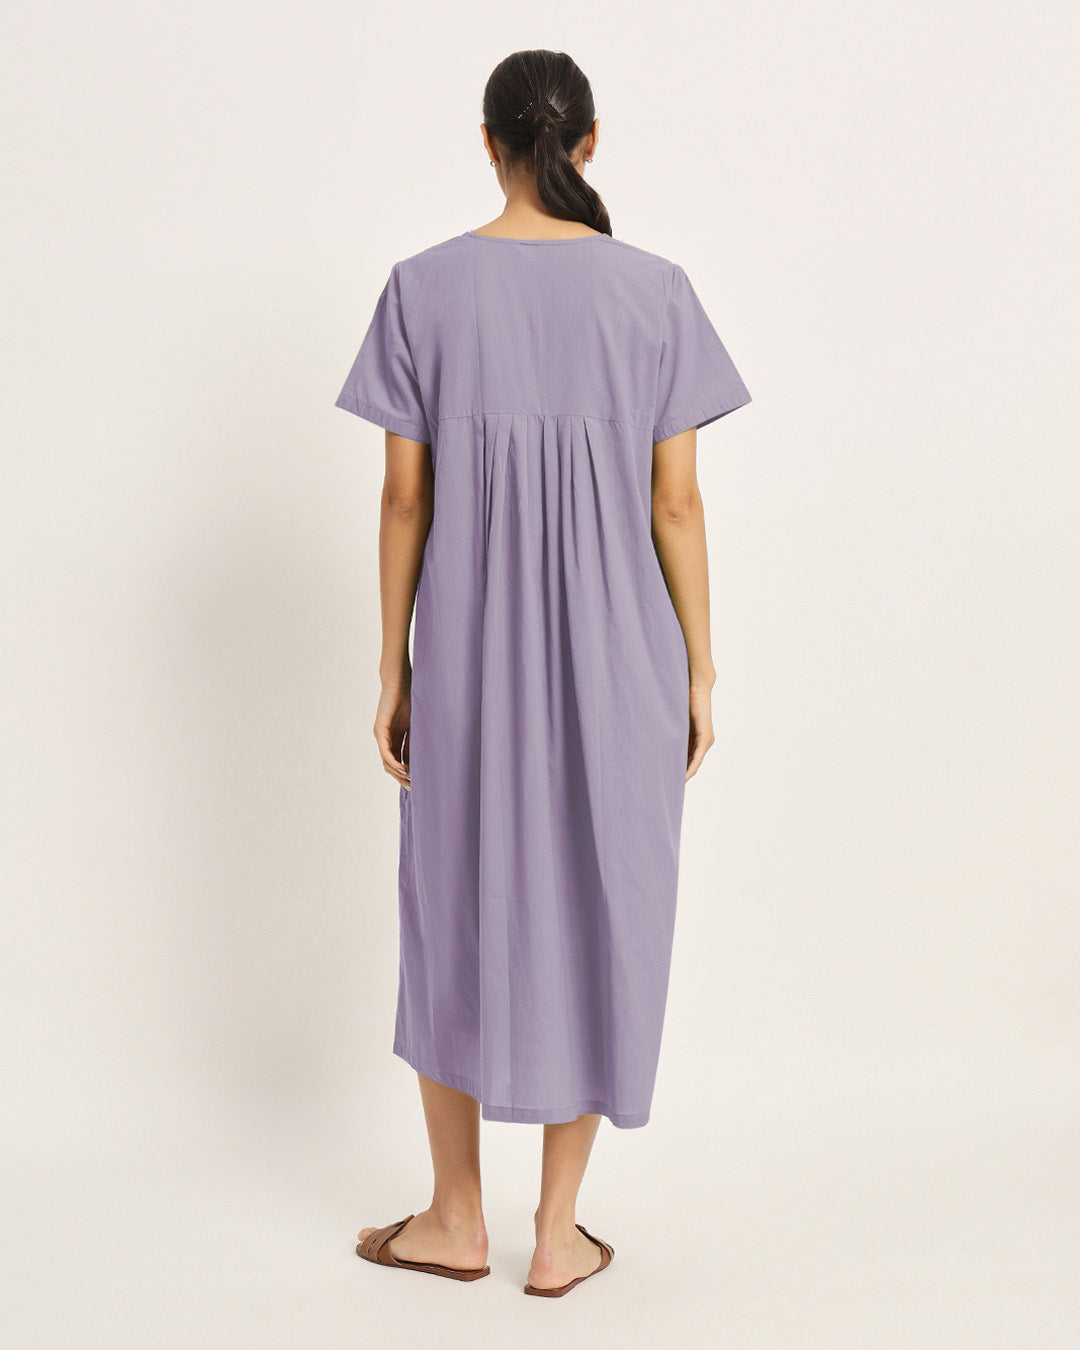 Combo: Iris Pink & Lilac Bump Blessing Maternity & Nursing Dress - Set of 2